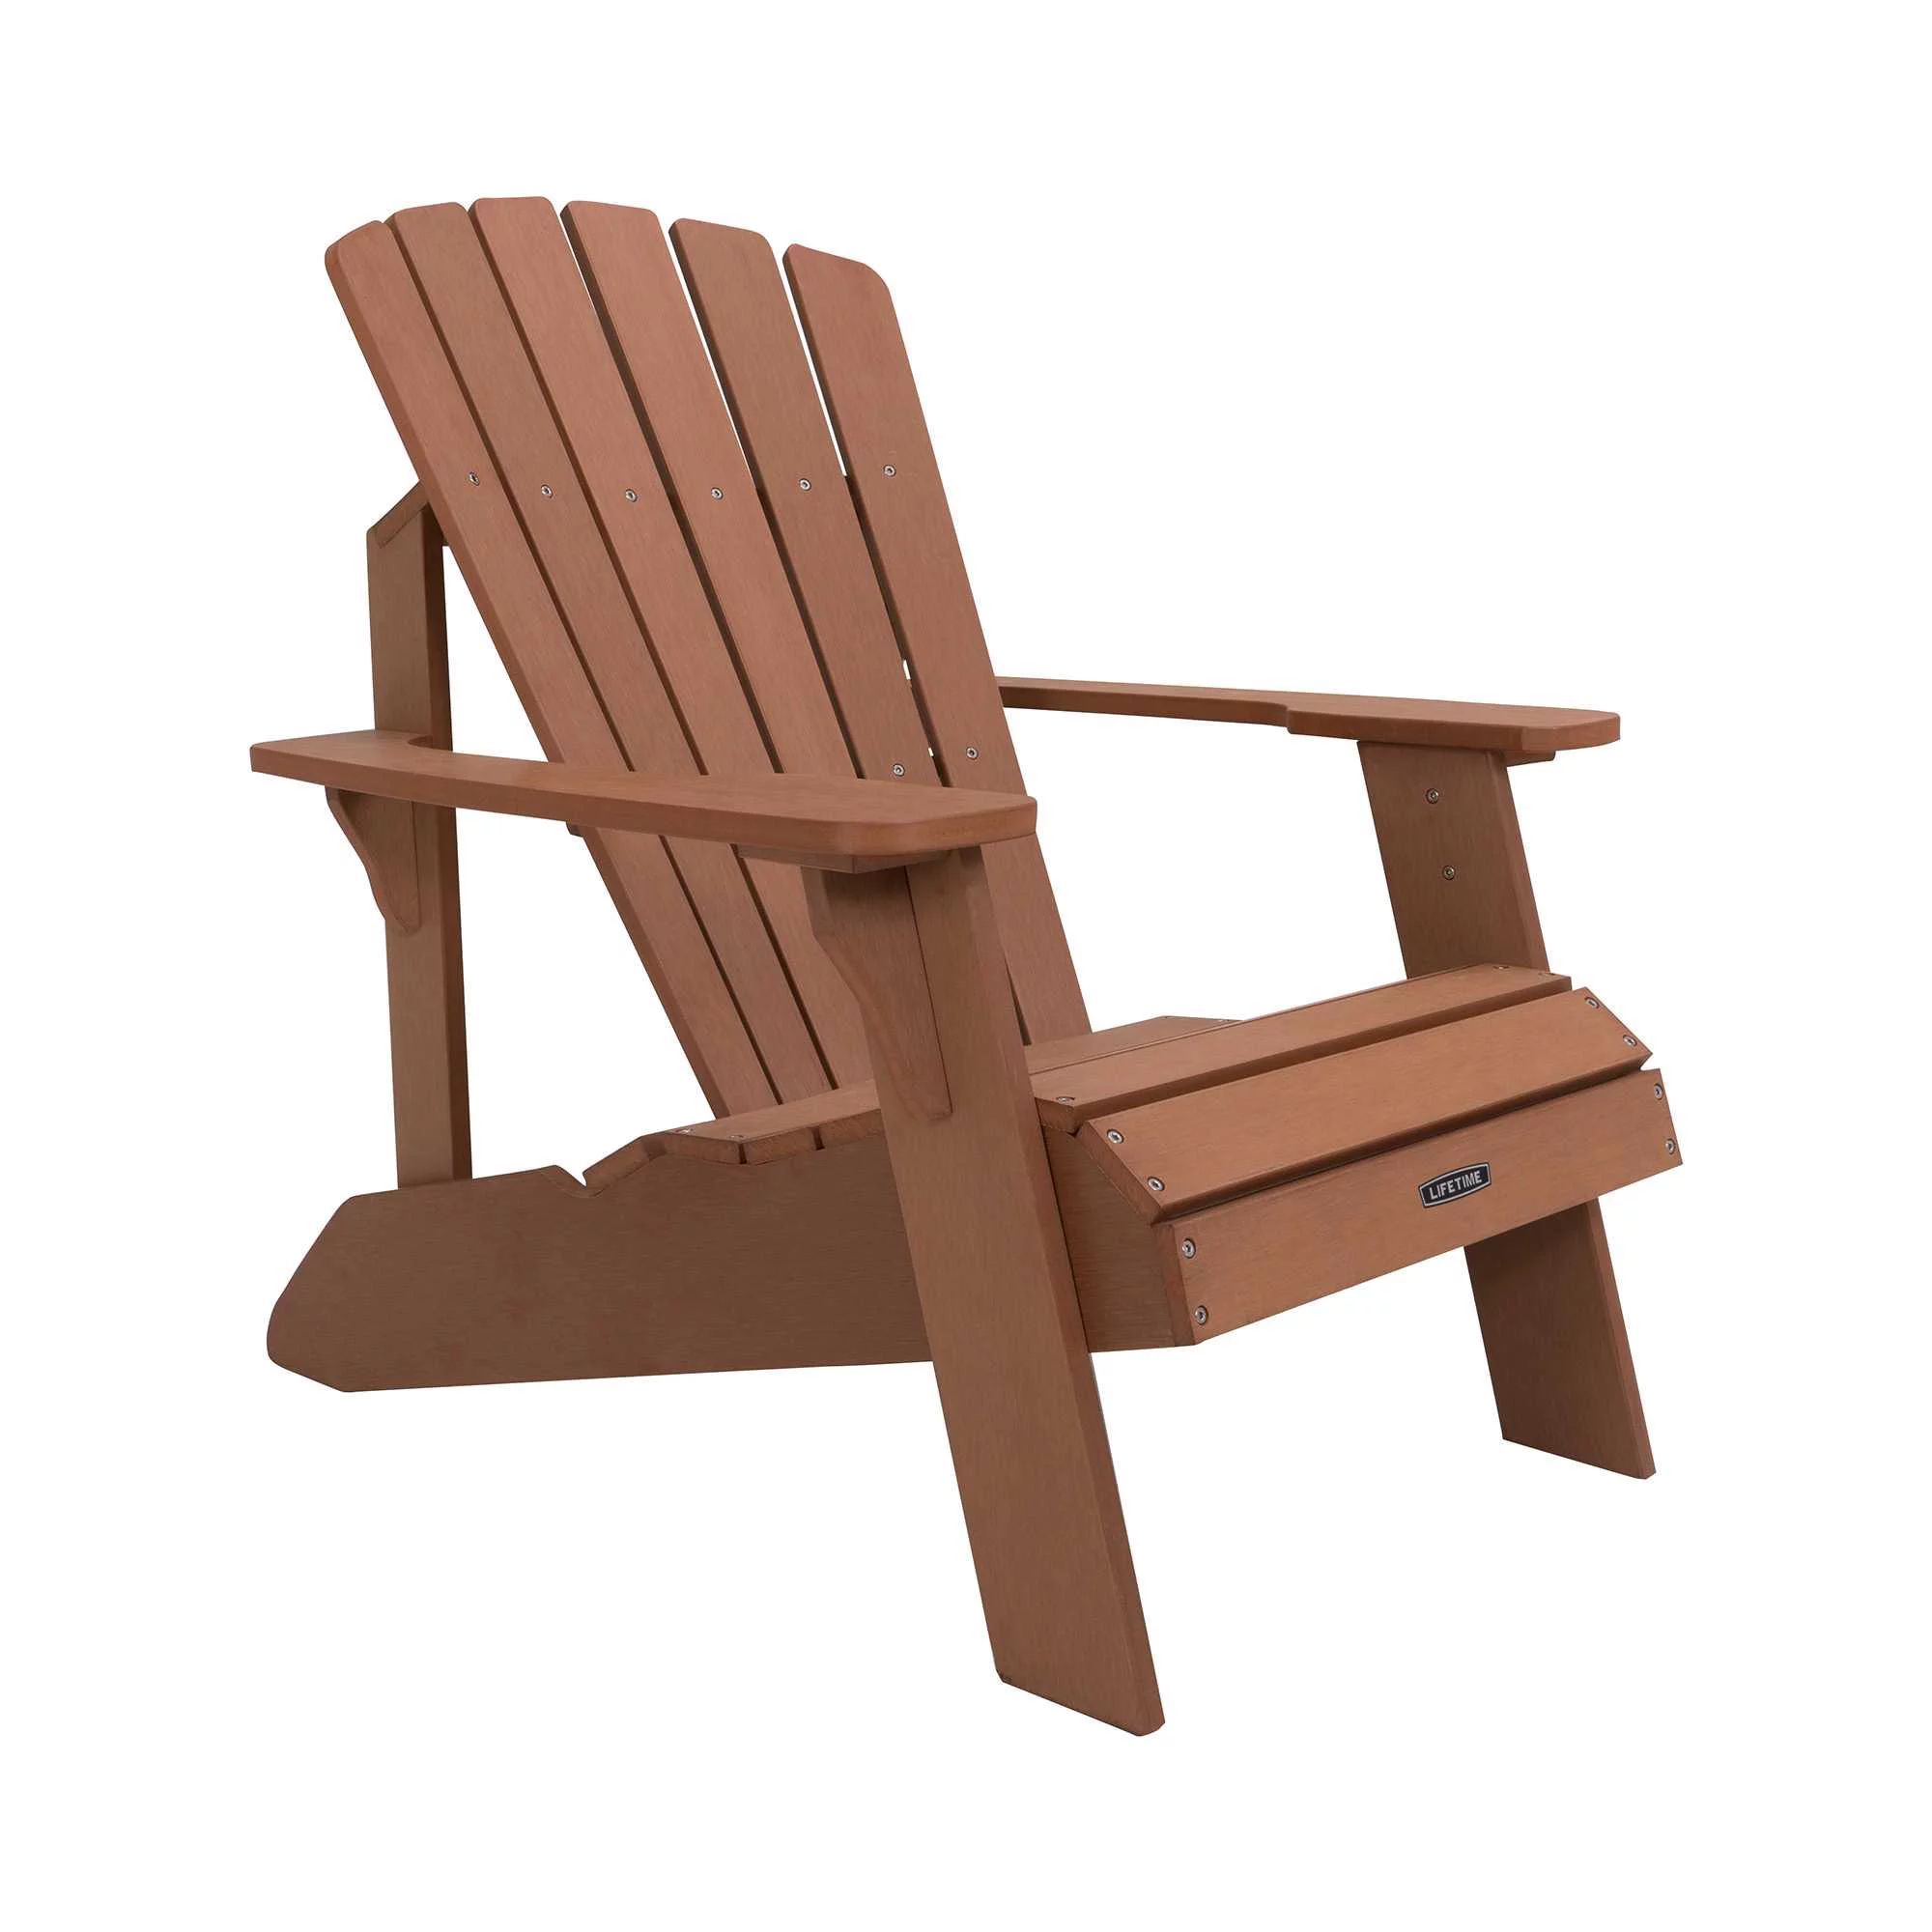 Lifetime Wood Alternative Adirondack Chair - Brown, 60064 | Walmart (US)